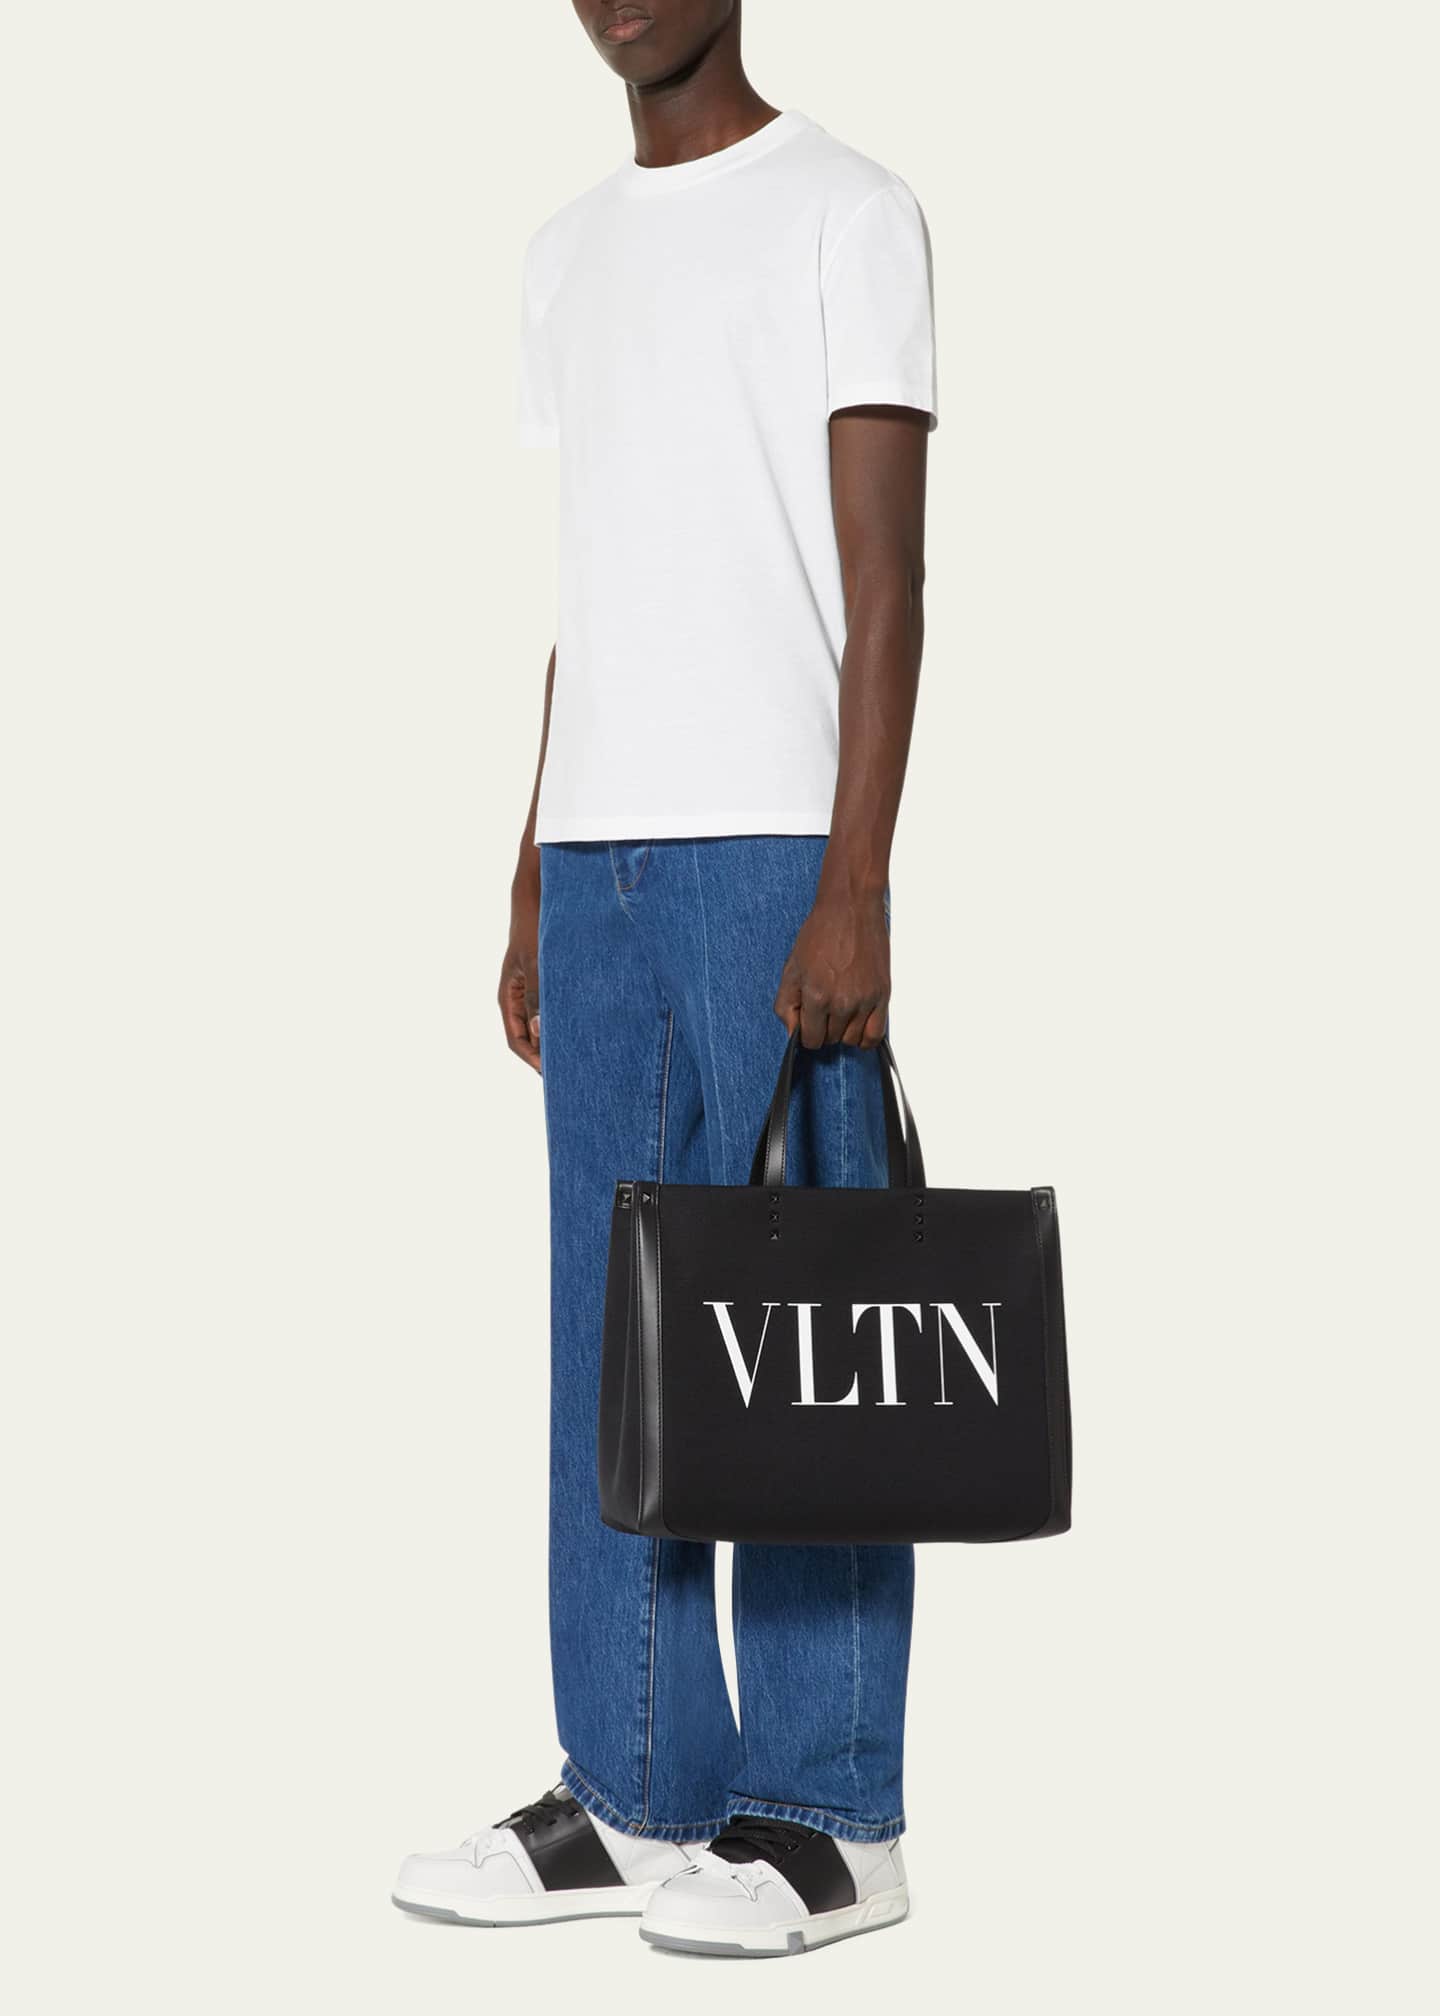 Valentino Garavani Men's VLTN Medium Canvas Tote Bag - Bergdorf Goodman